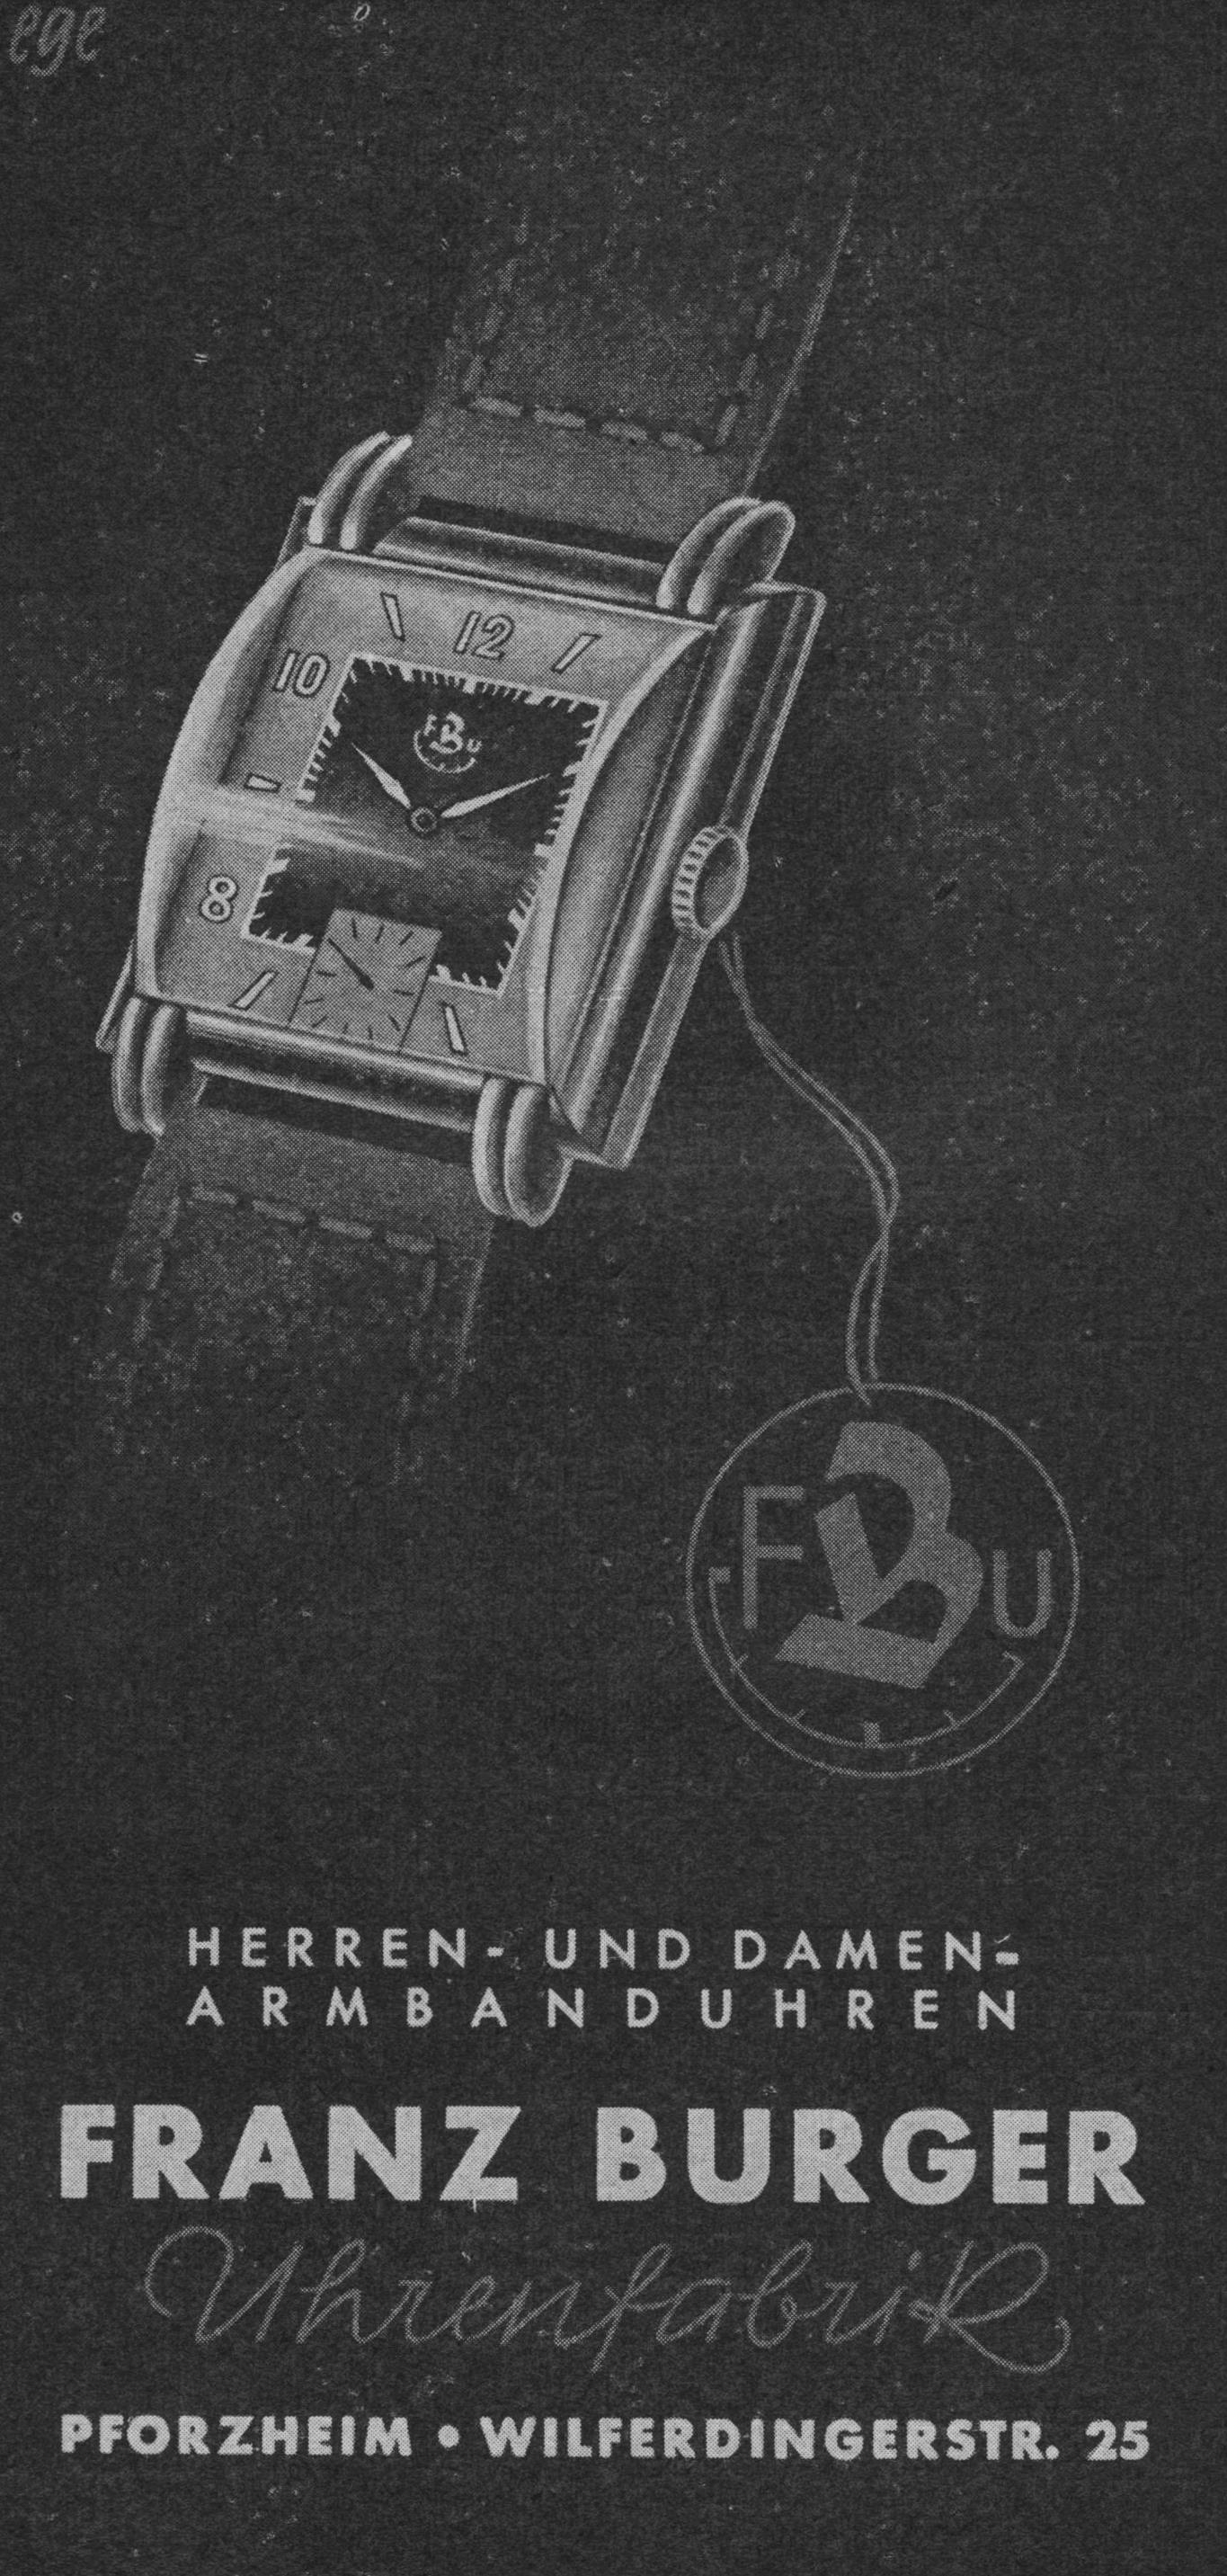 FBU 1950.jpg